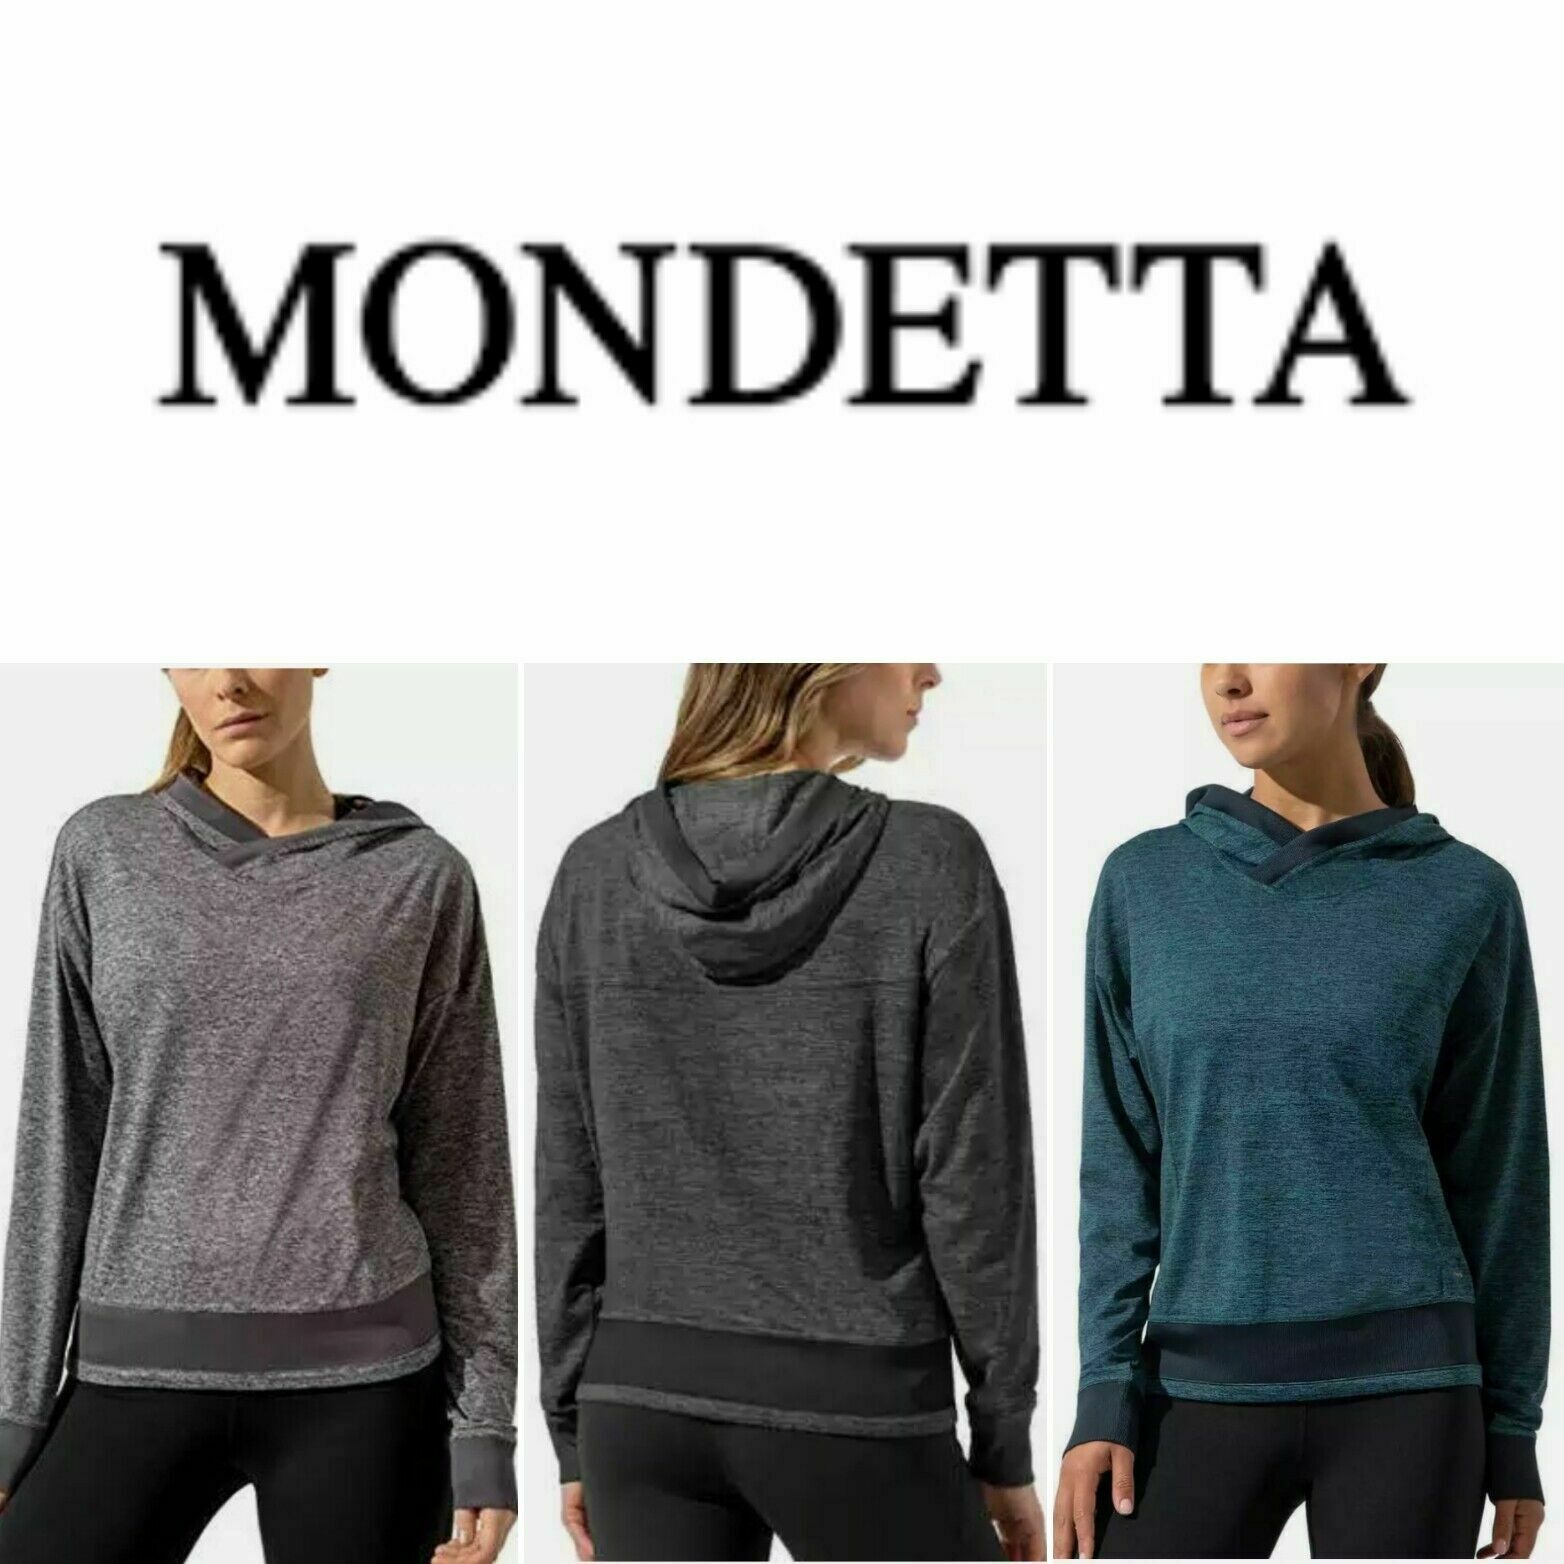 Mondetta Ladies' Knit Fleece Crewneck